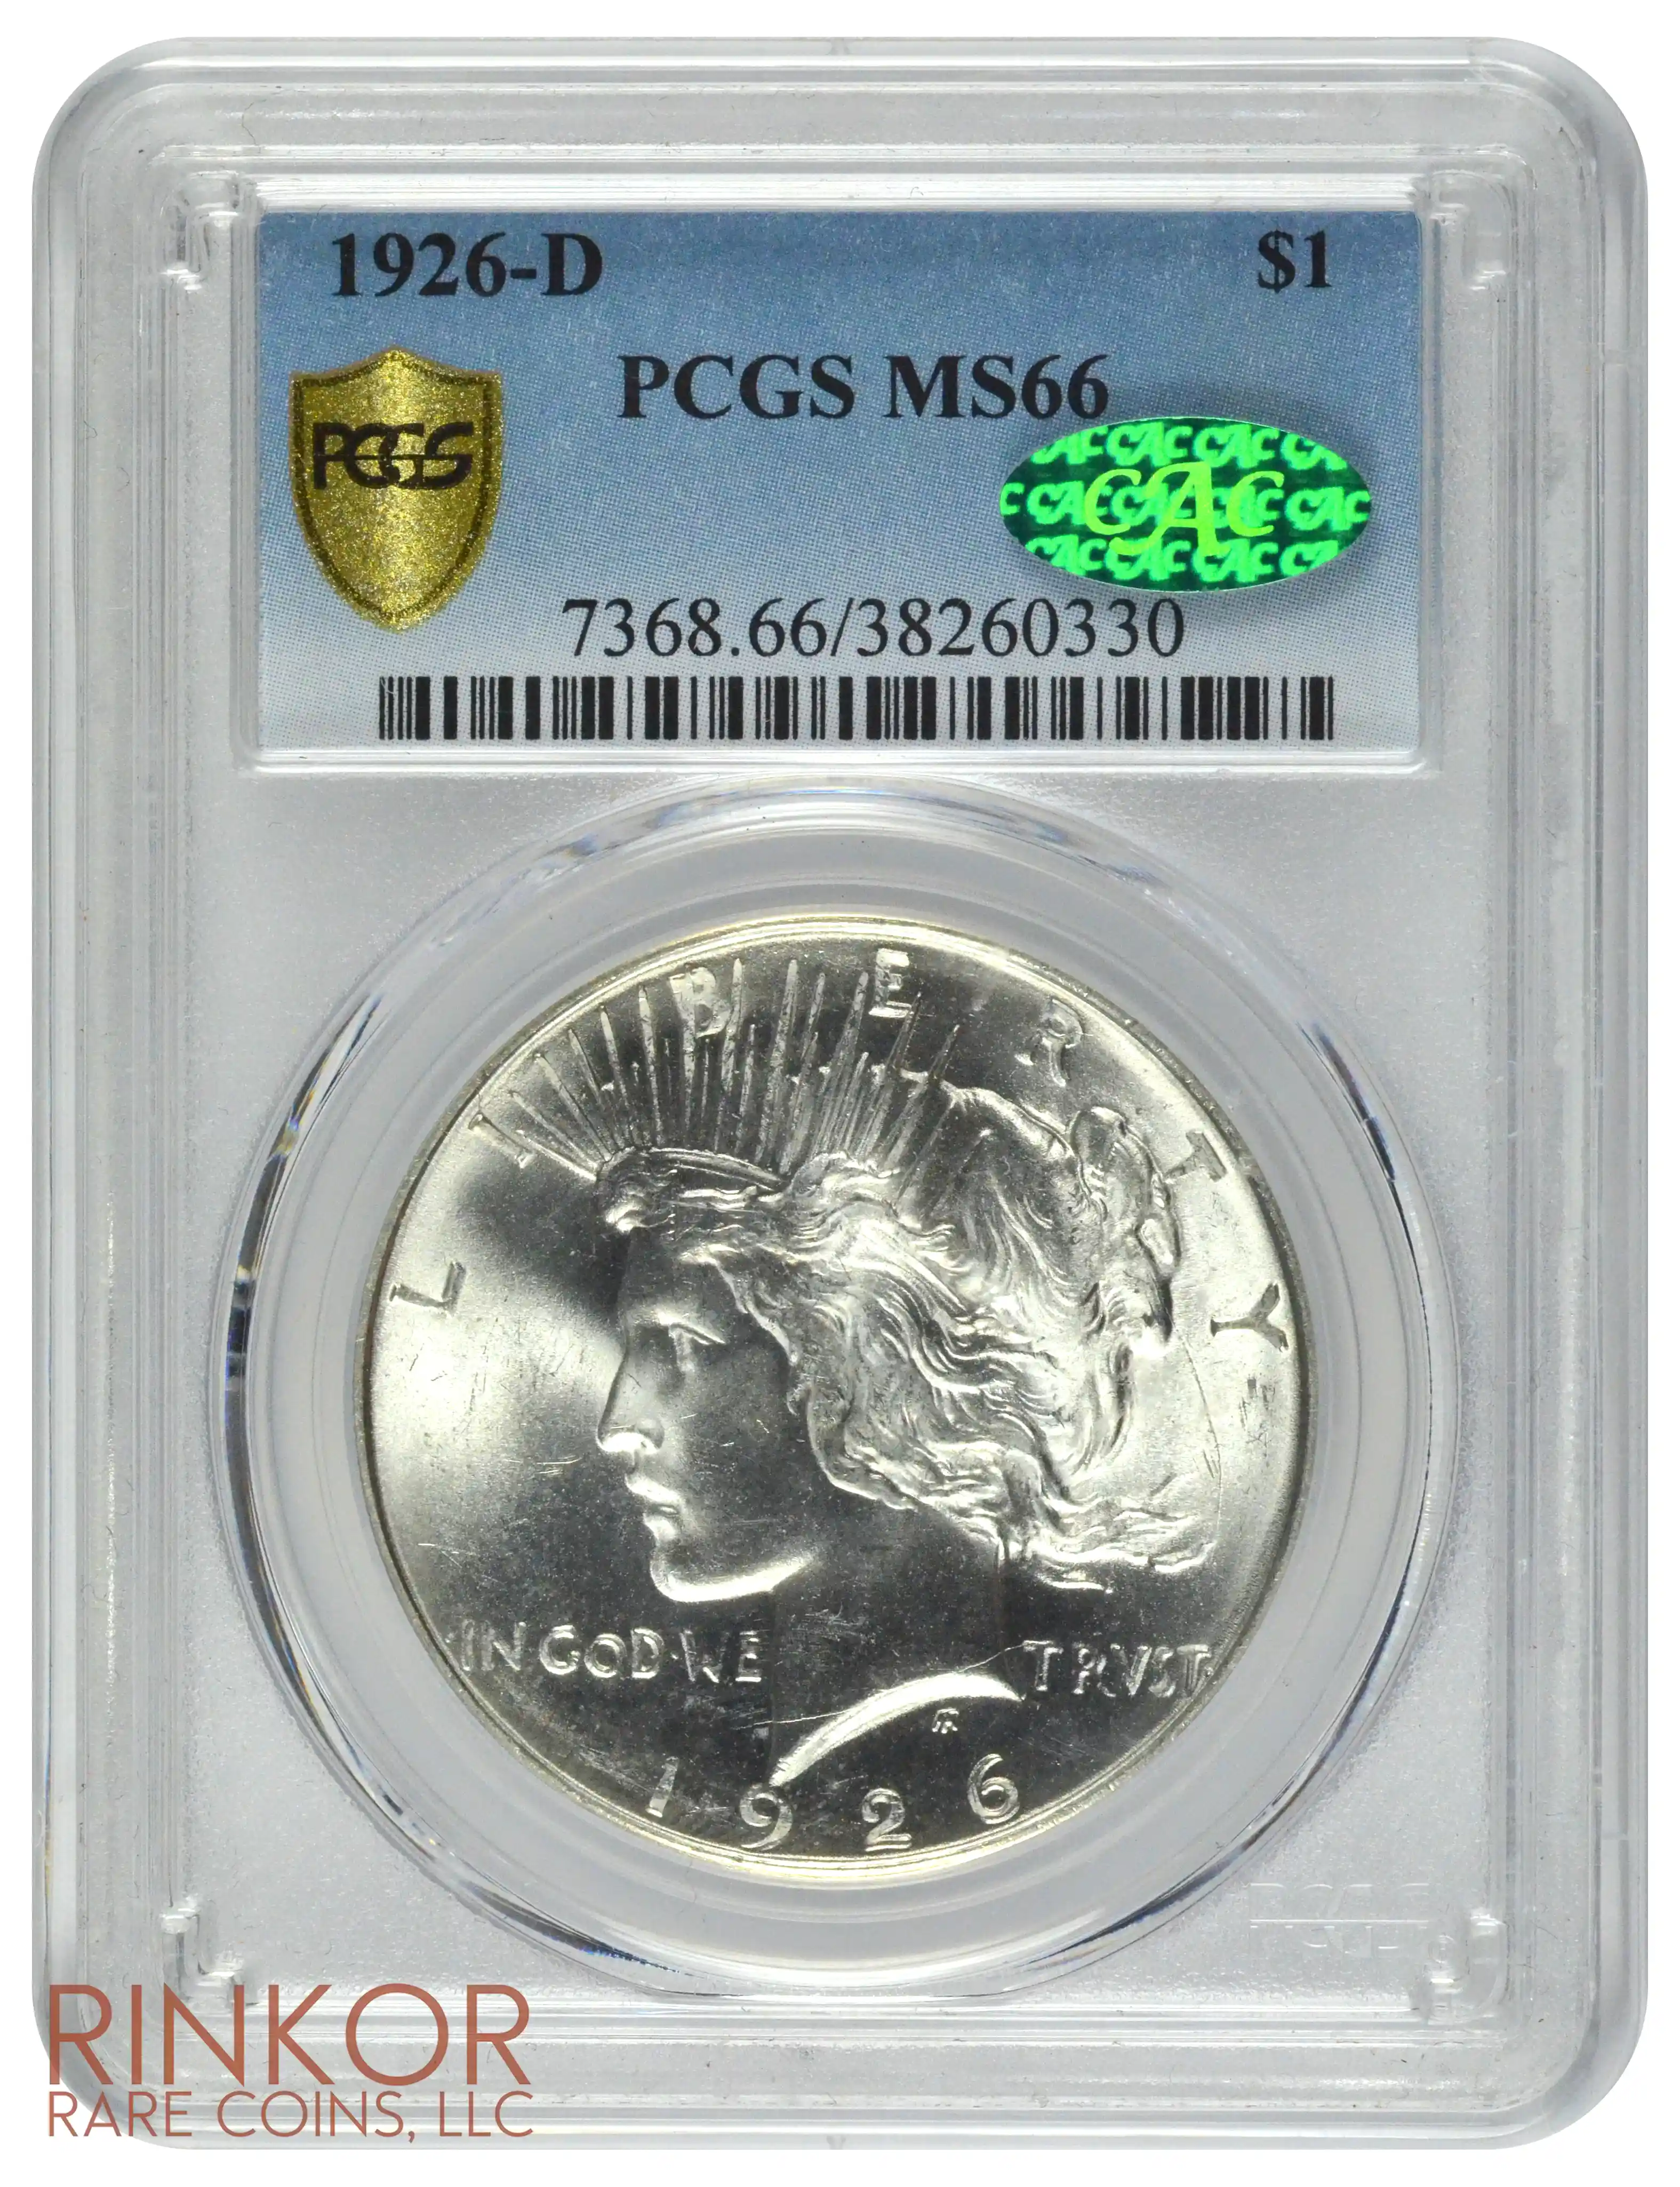 1926-D $1 PCGS MS 66 CAC